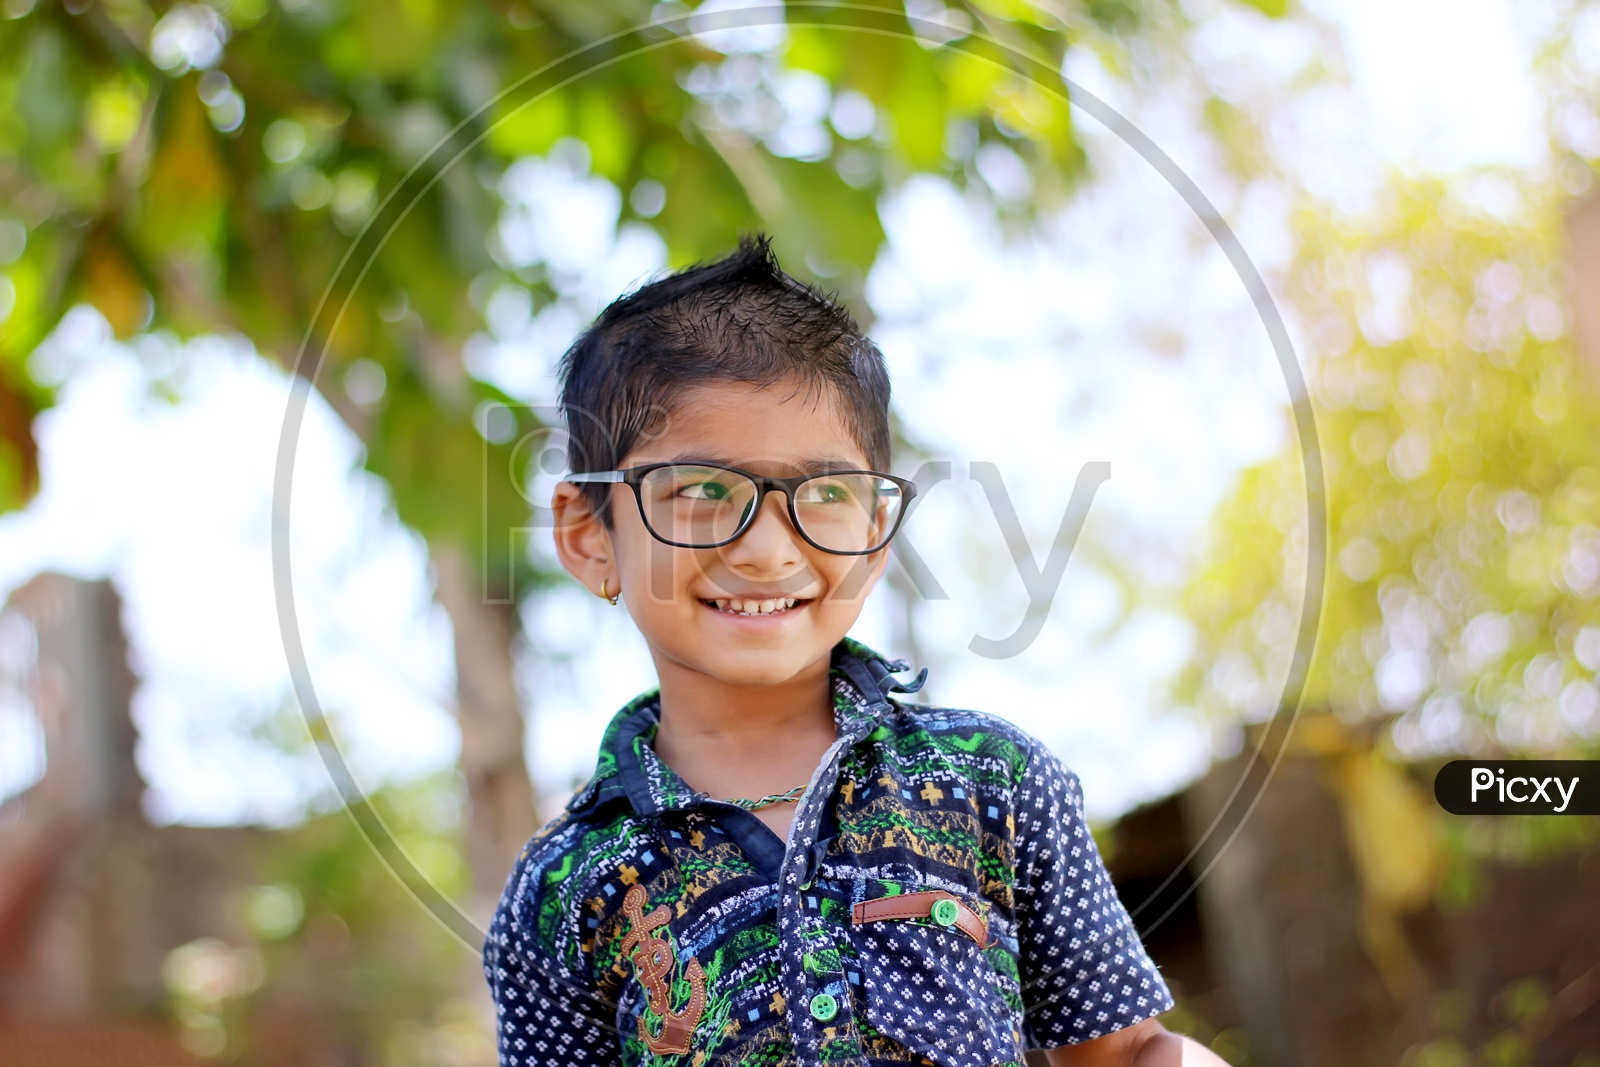 Smiling Indian Child on Eyeglass